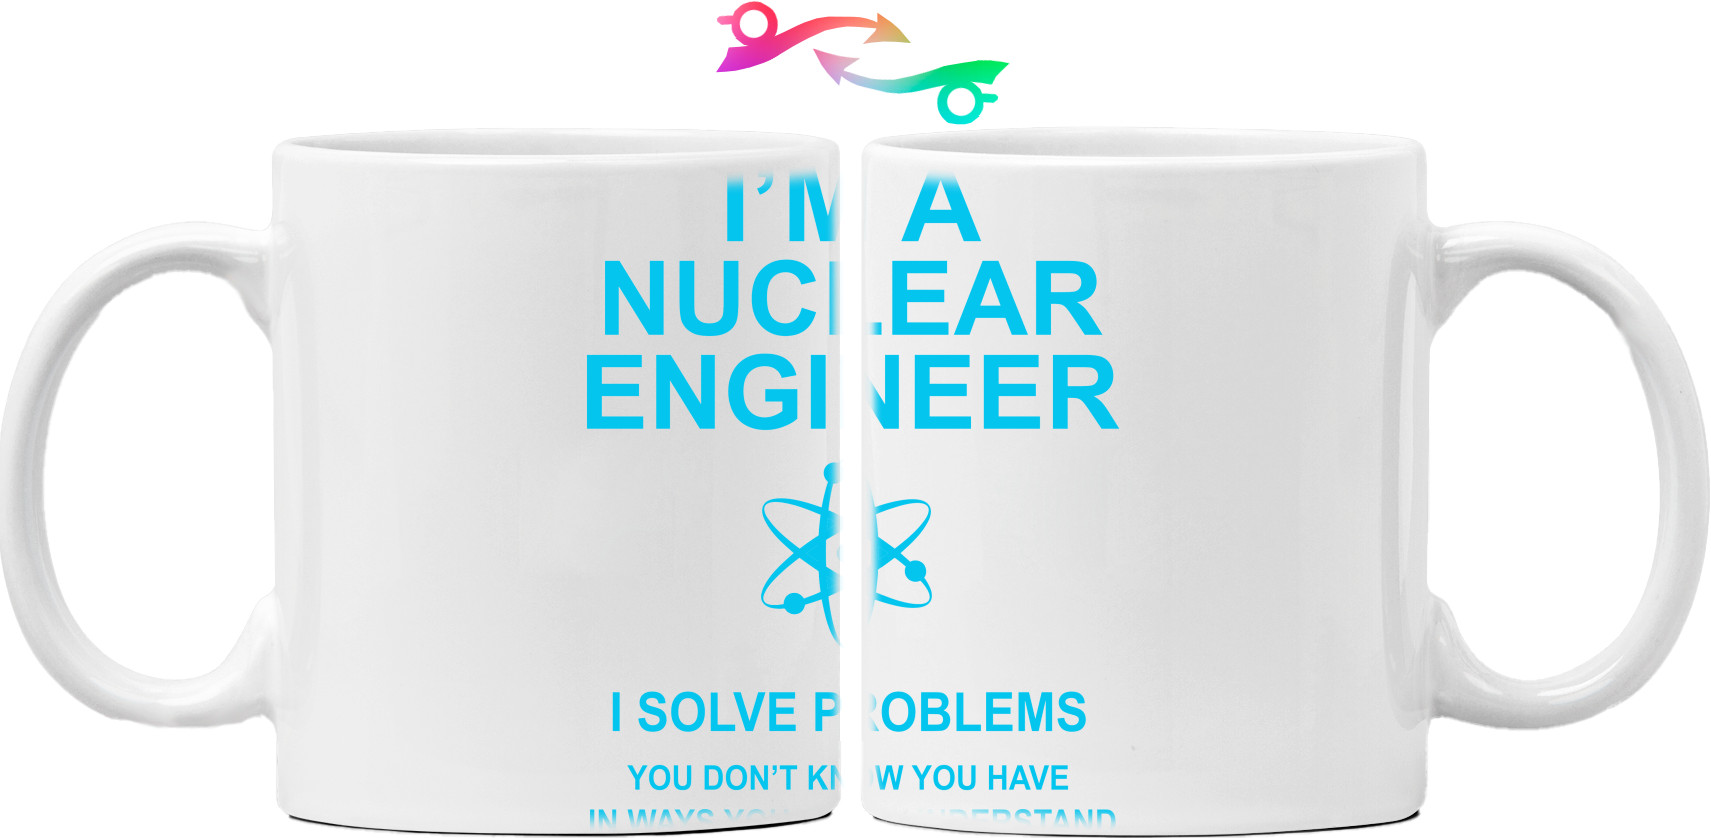 Nuclear engineer